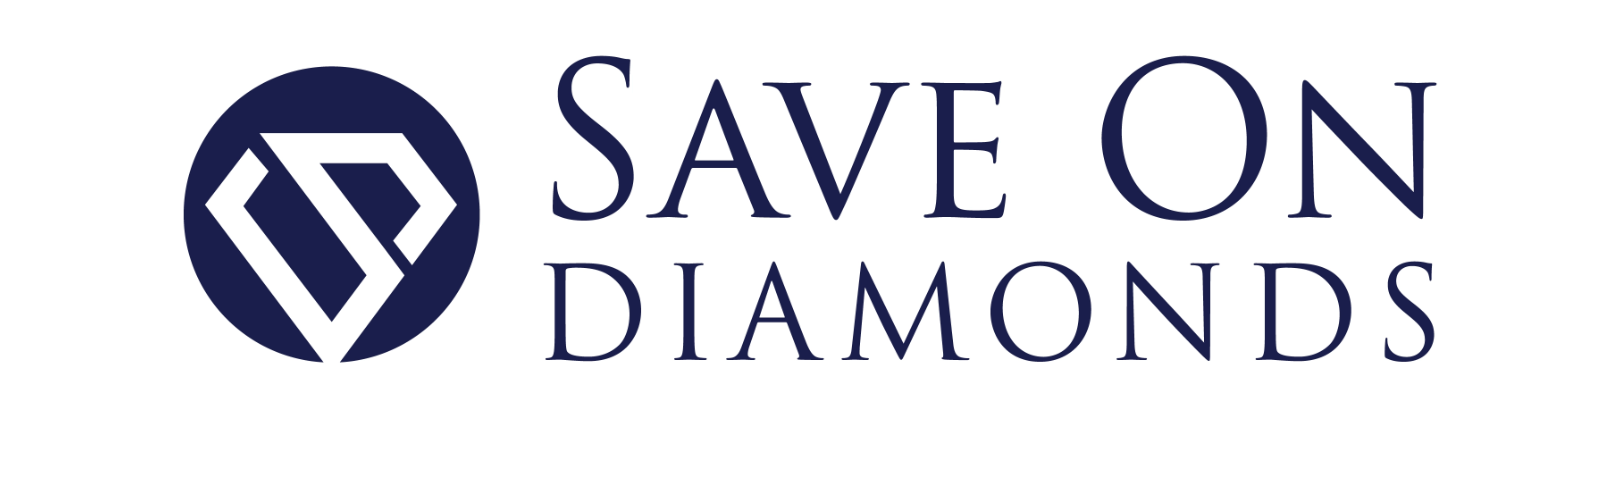 Save On Diamonds